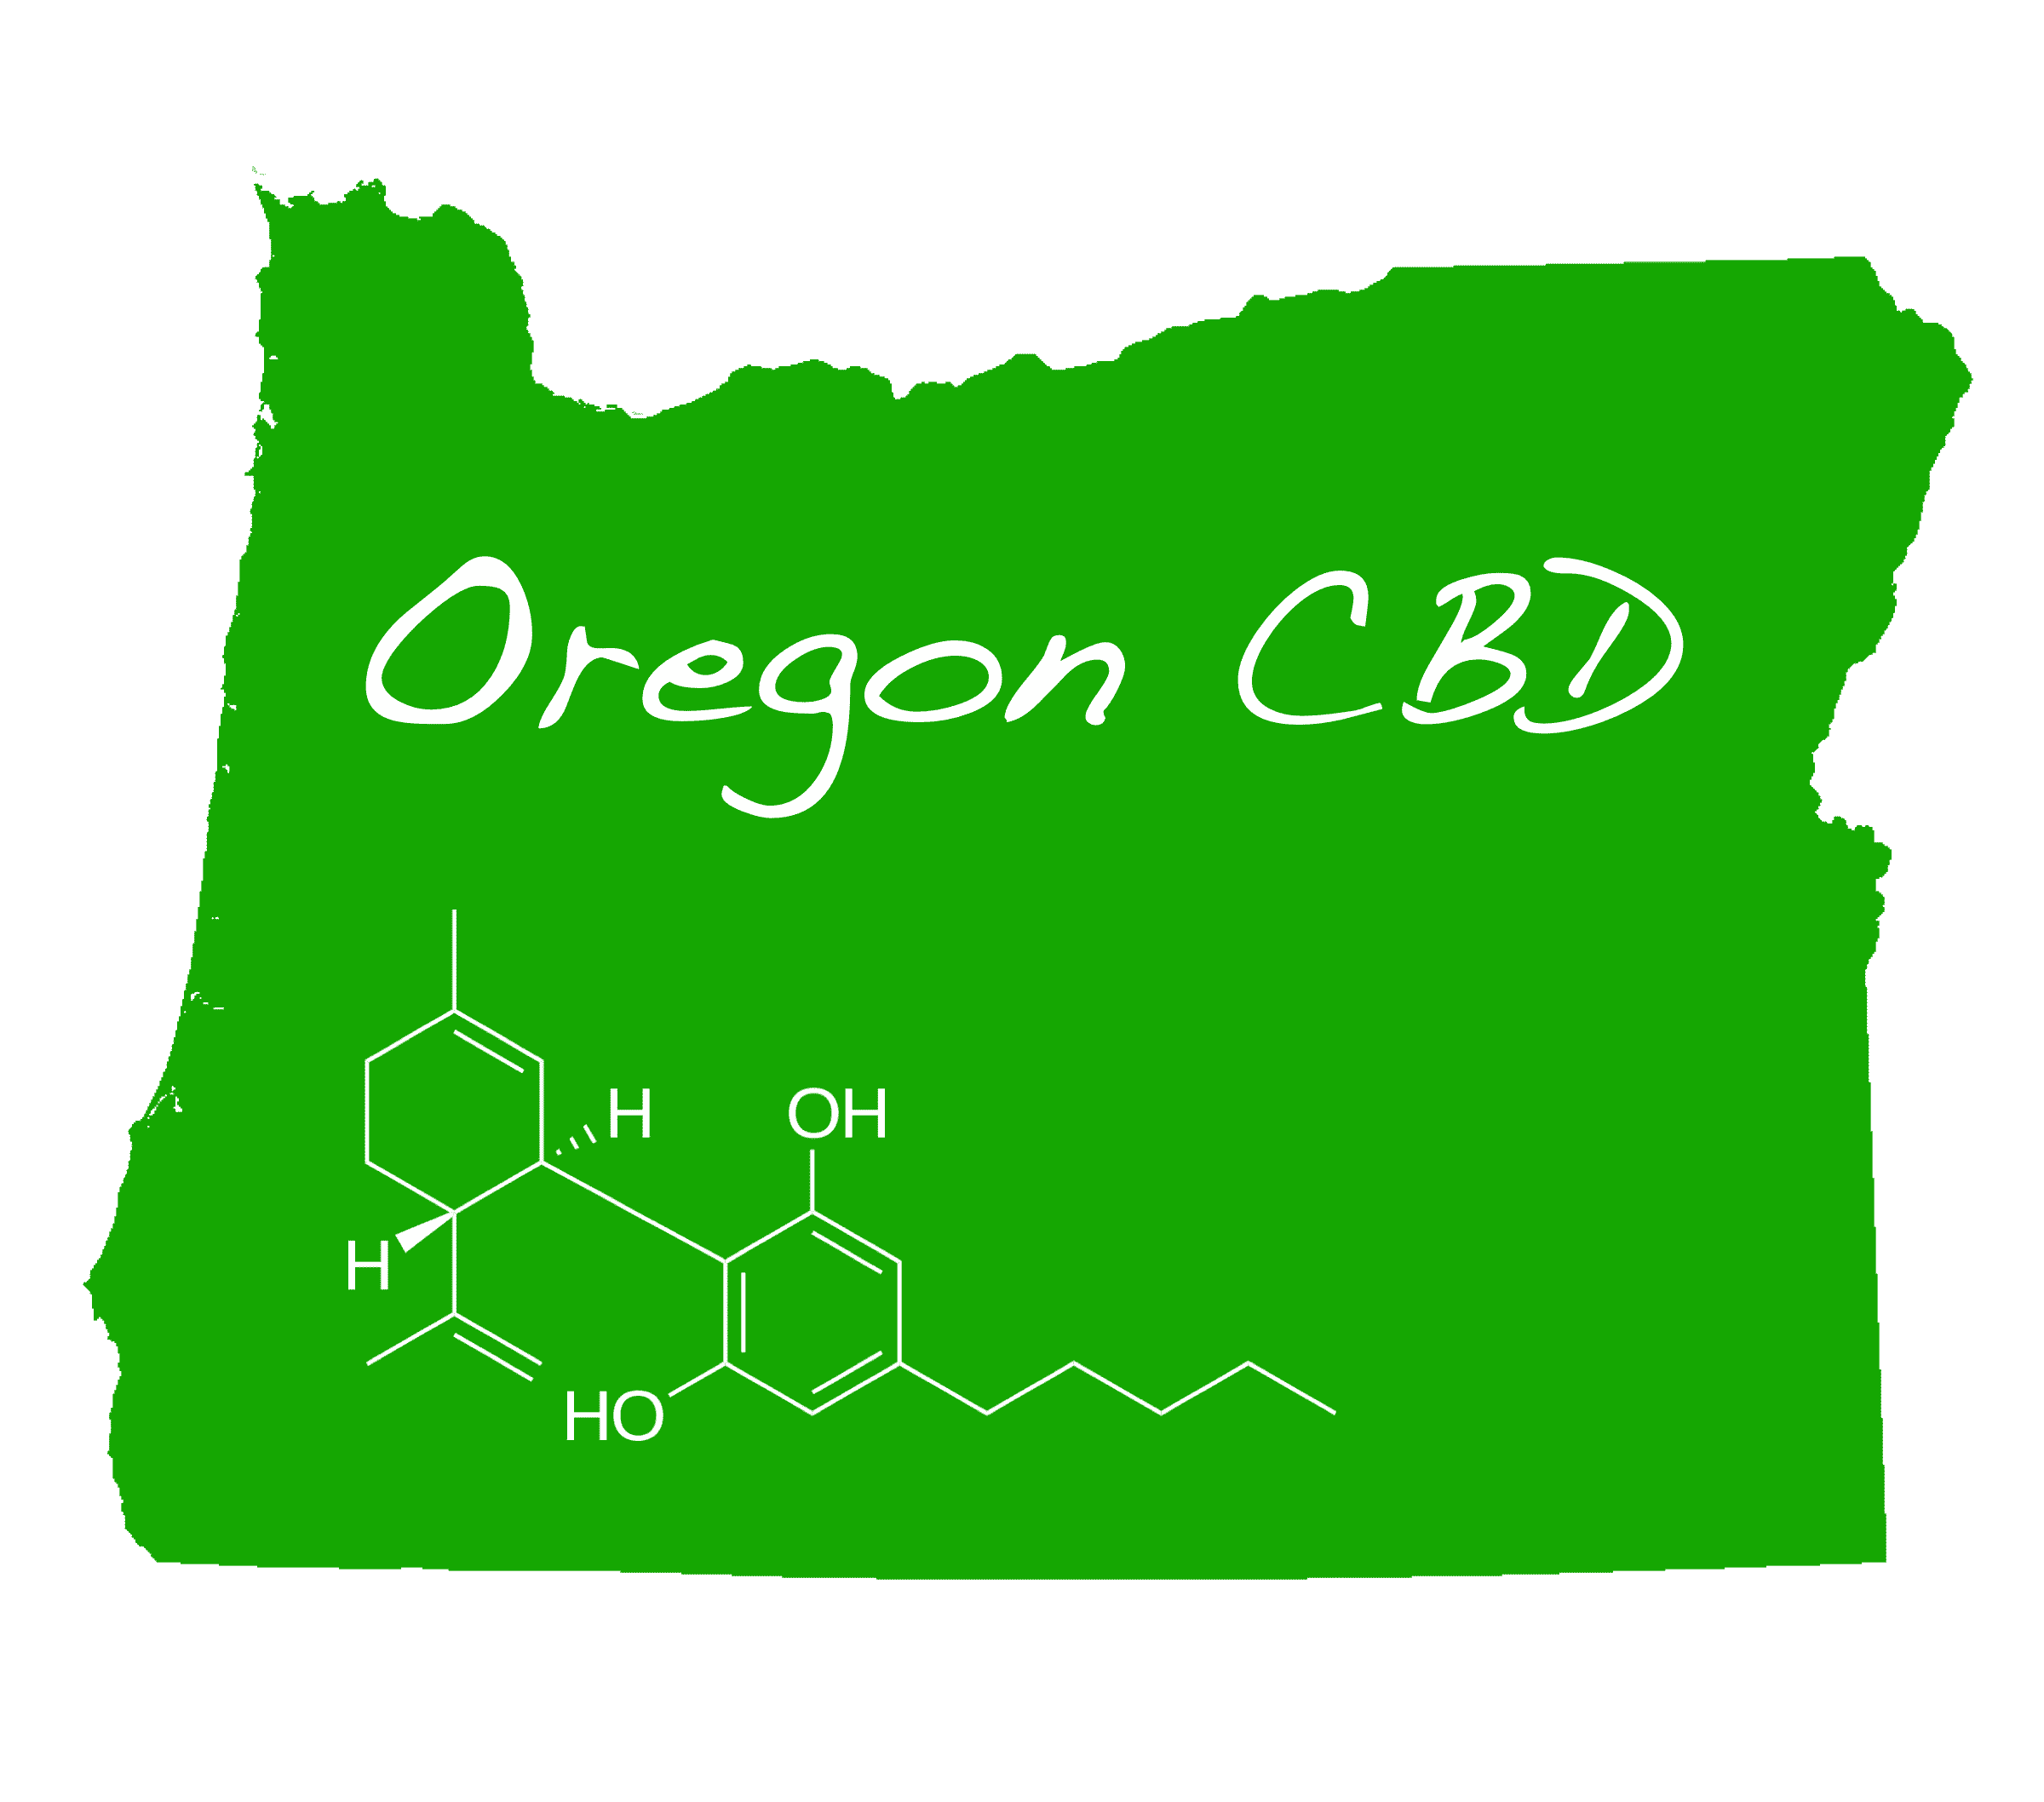 Oregon CBD logo